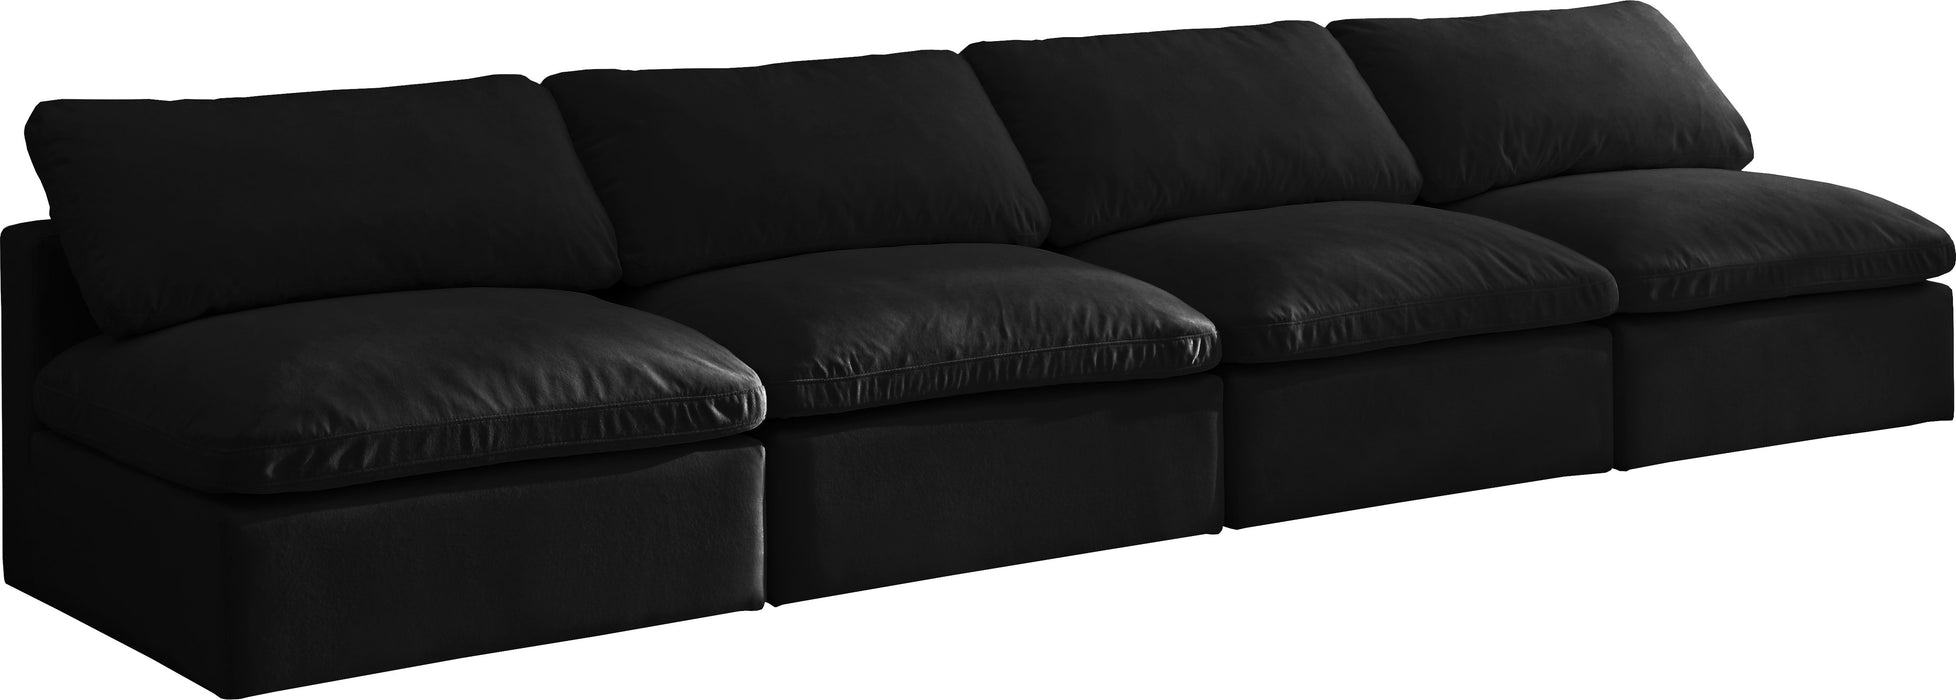 Plush - Modular Armless 4 Seat Sofa